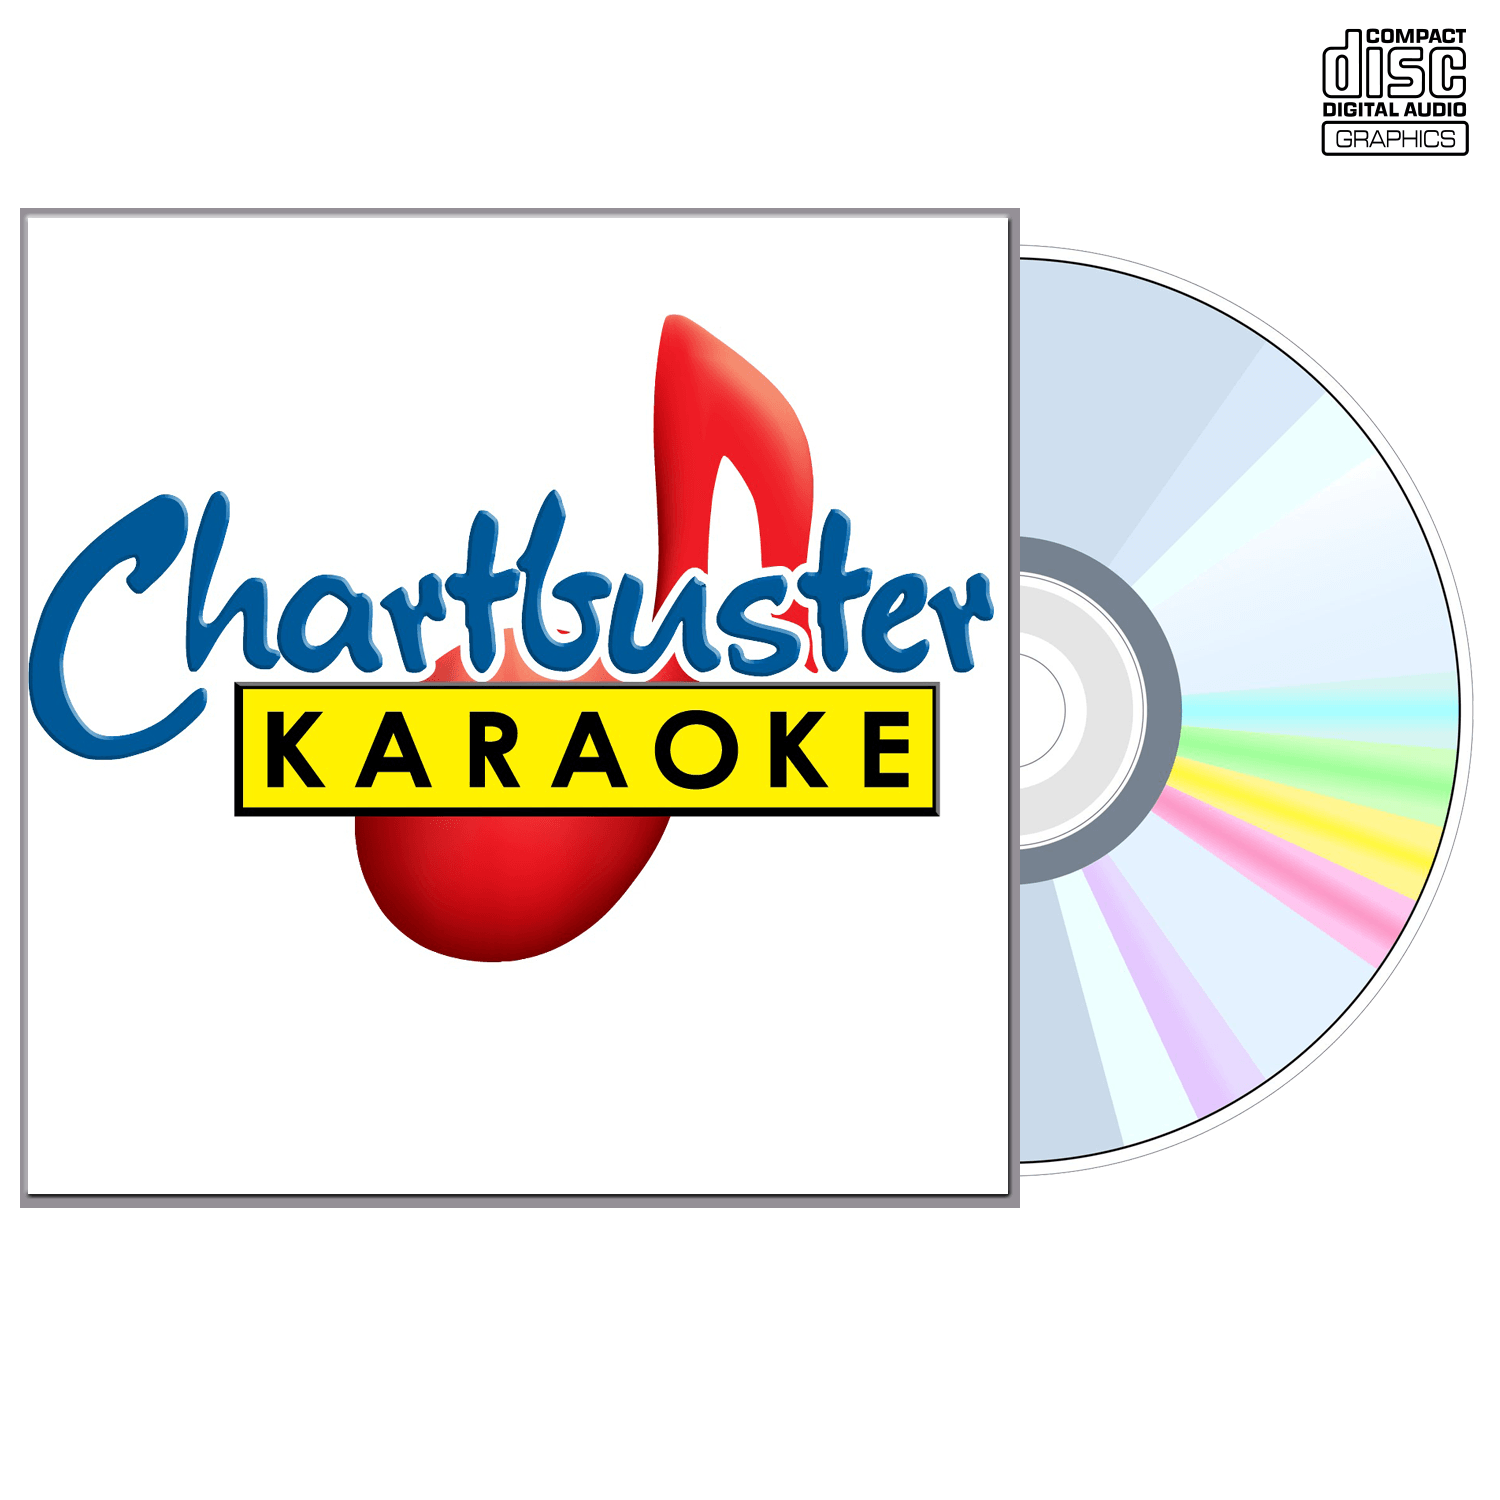 Best Of George Strait 00's - CD+G - Chartbuster Karaoke - Karaoke Home Entertainment